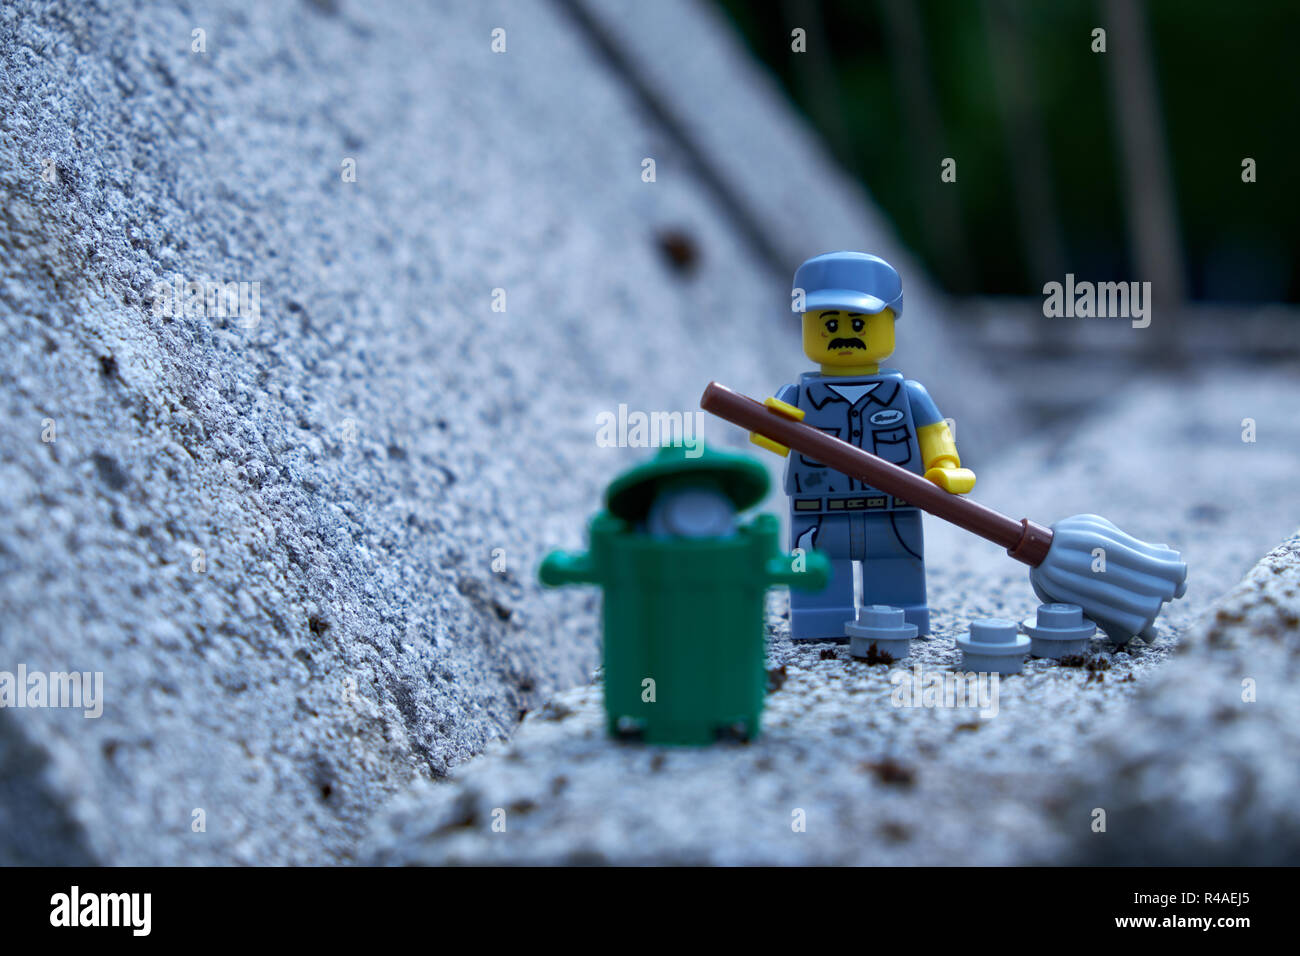 LEGO Street cleaner Stock Photo - Alamy